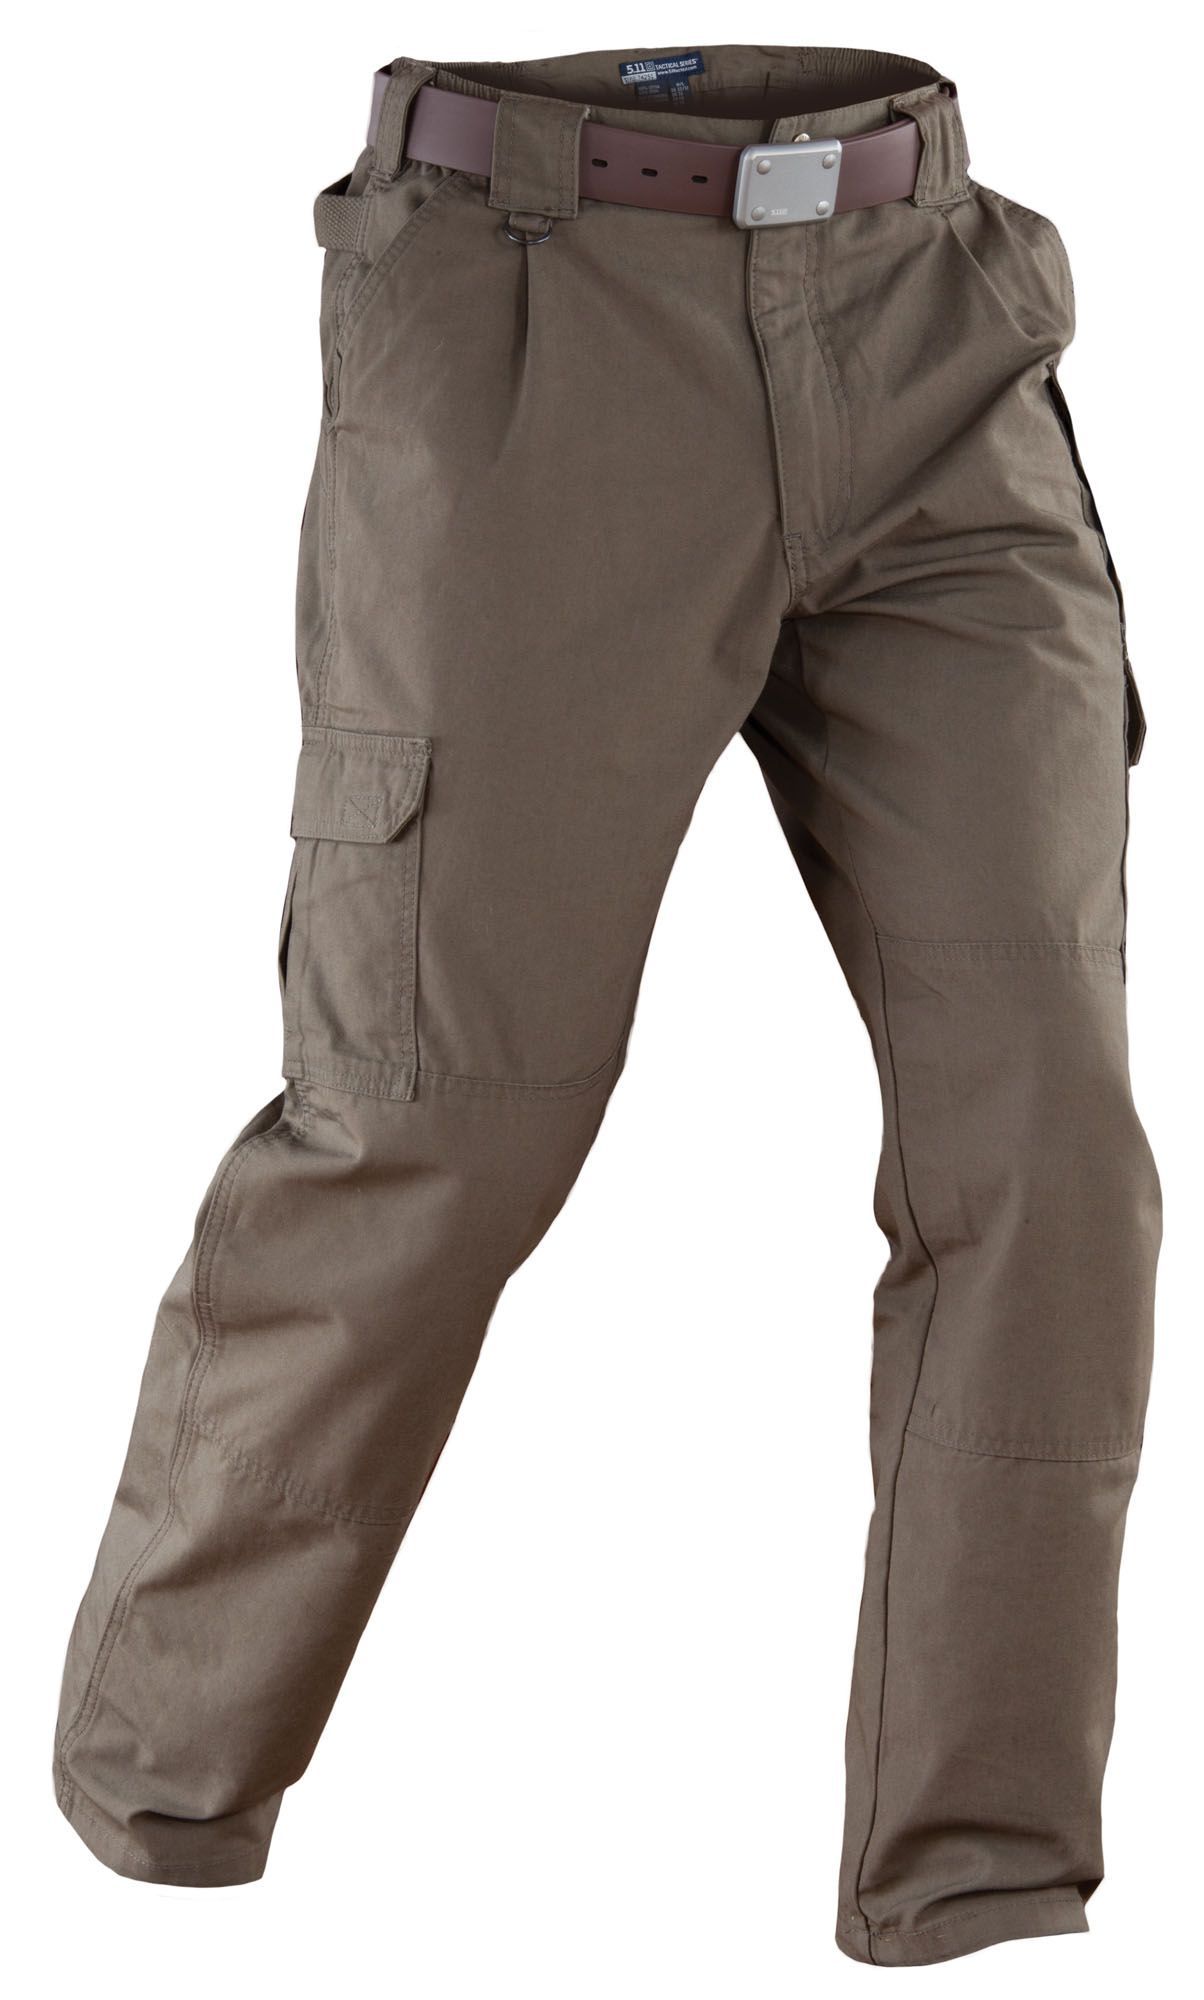 5.11 Tactical Men's Original Tactical Pant Law & Safety | Streicher's